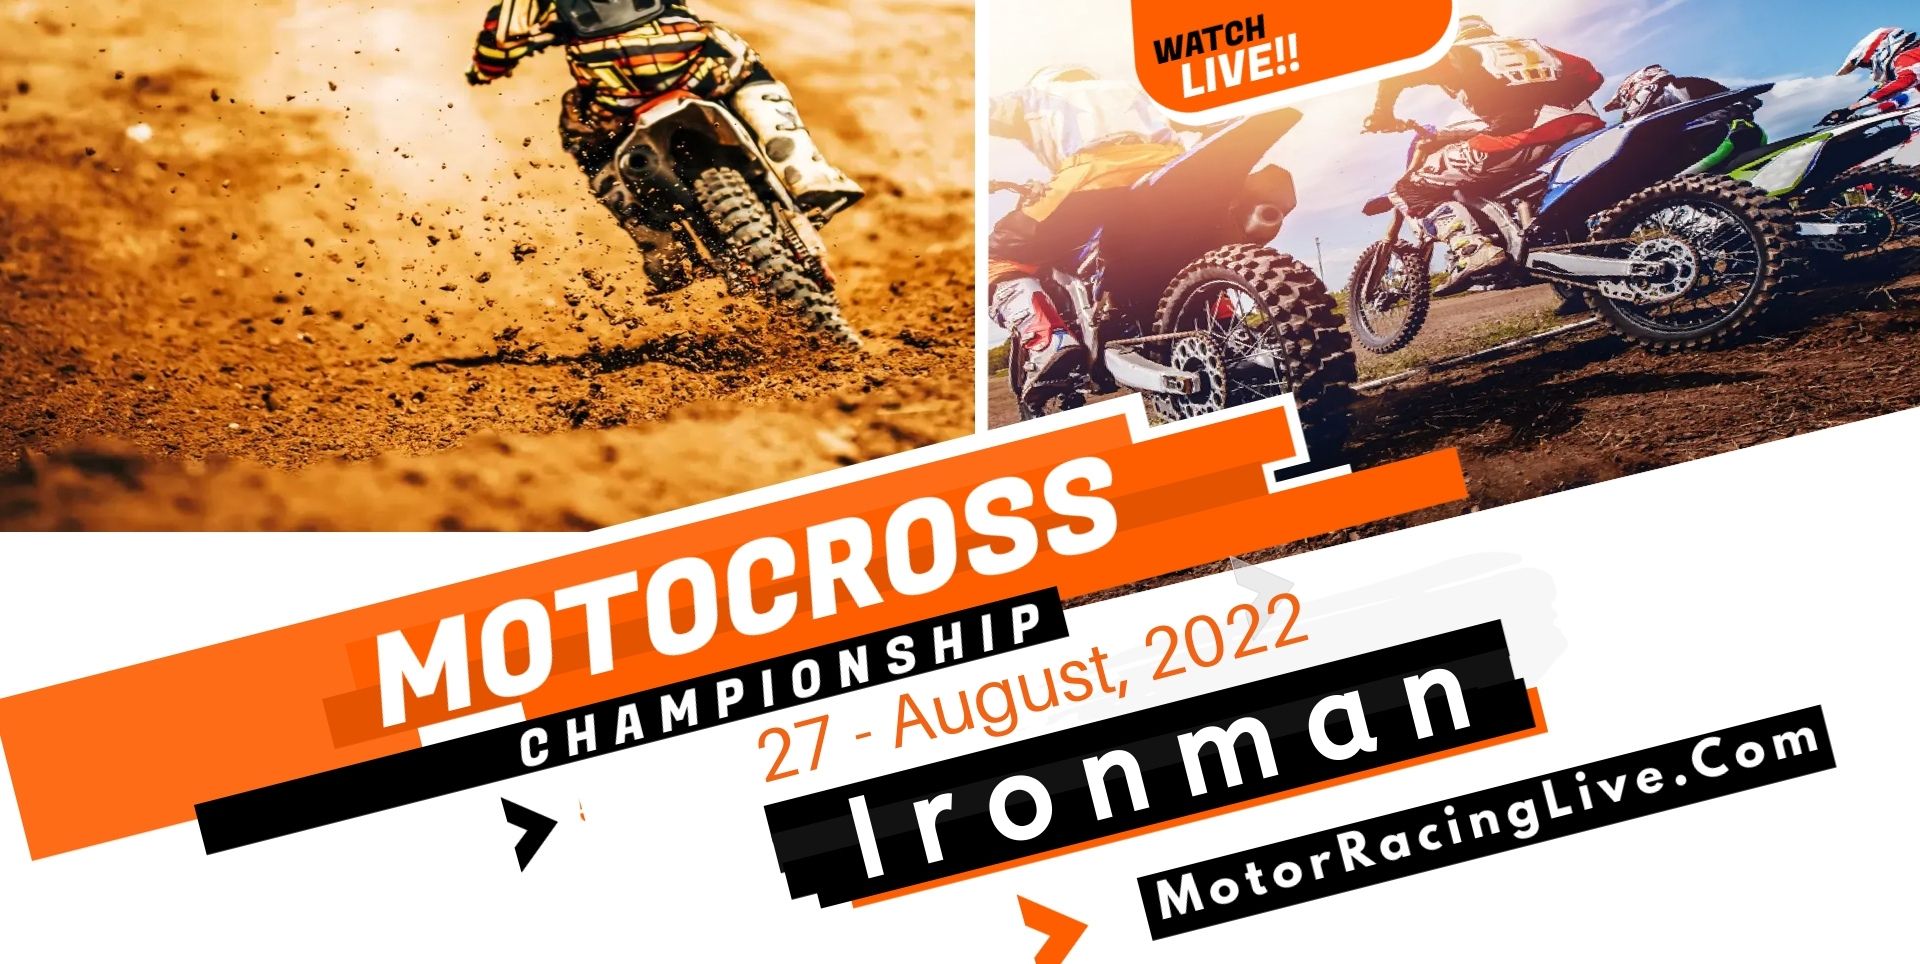 Ironman Live Stream 2022 | Motocross